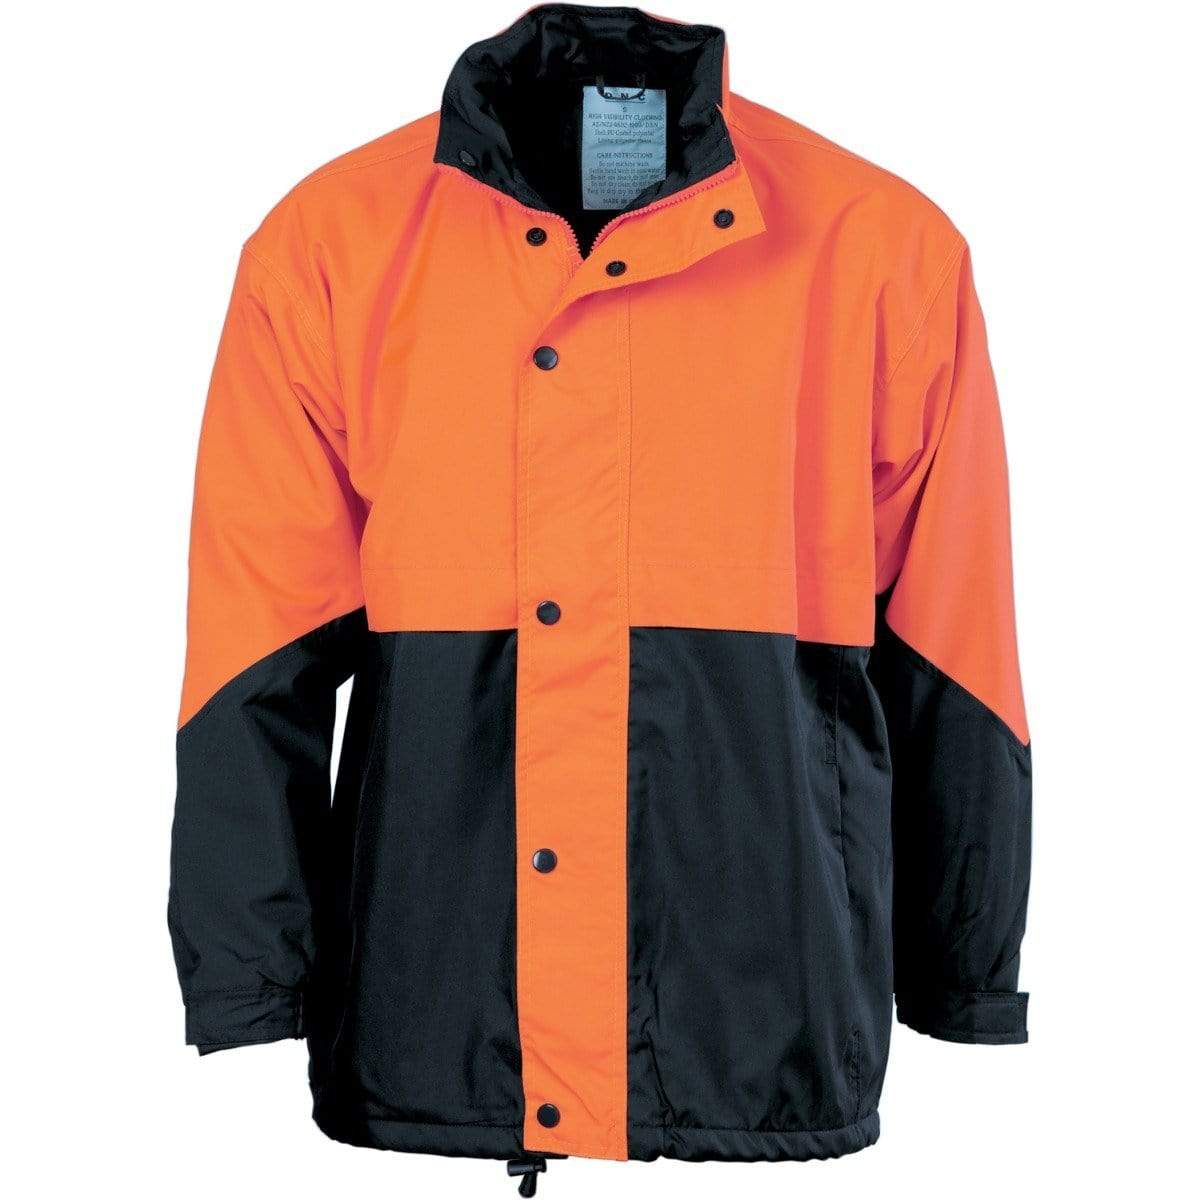 Dnc Workwear Hi-vis Two-tone Classic Jacket - 3866 Work Wear DNC Workwear Orange/Navy S 